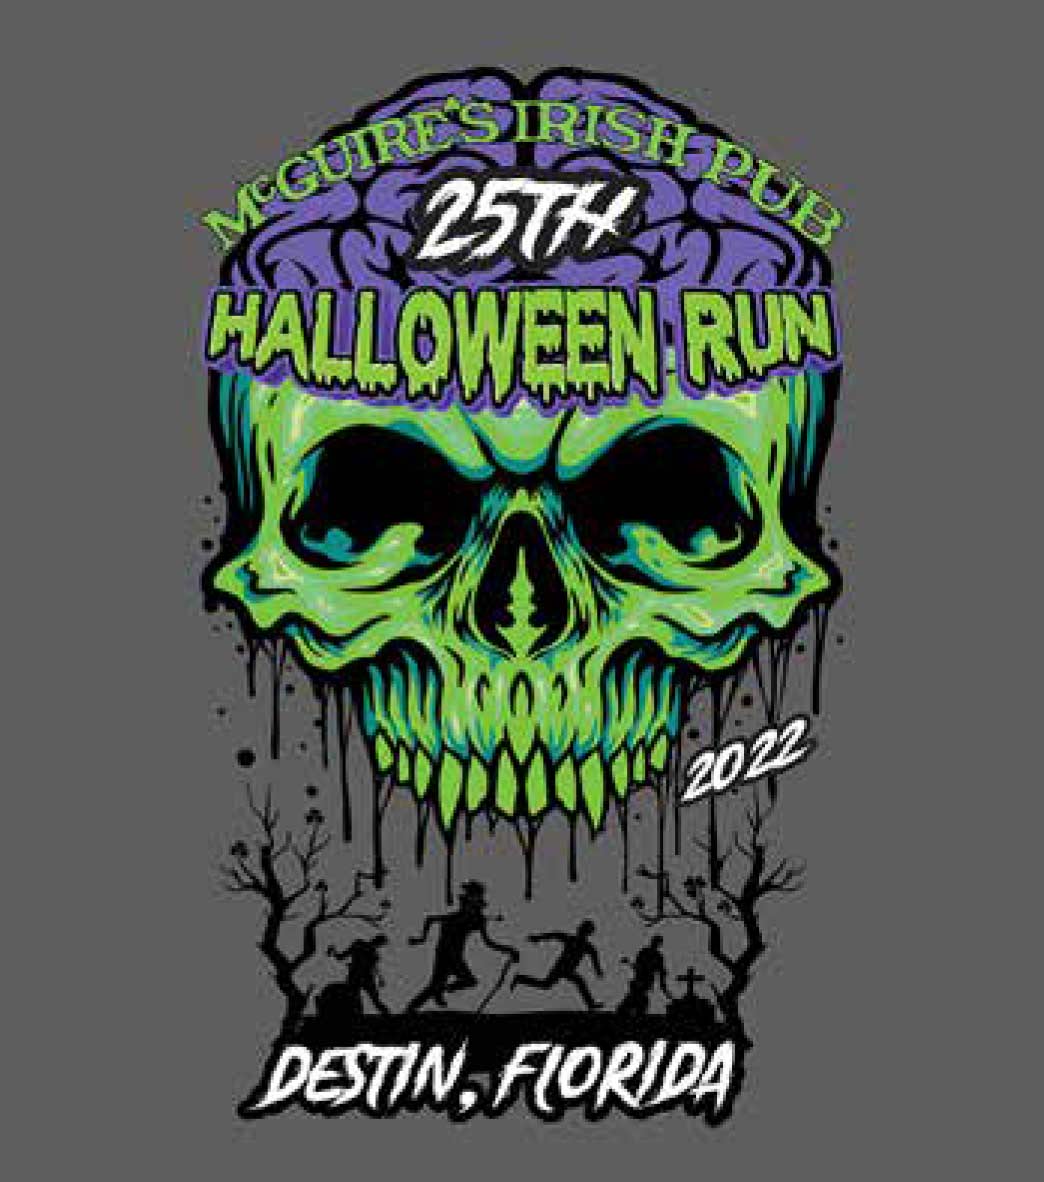 McGuire's of Destin 25th Annual Halloween 5K Run/Walk 10K Run